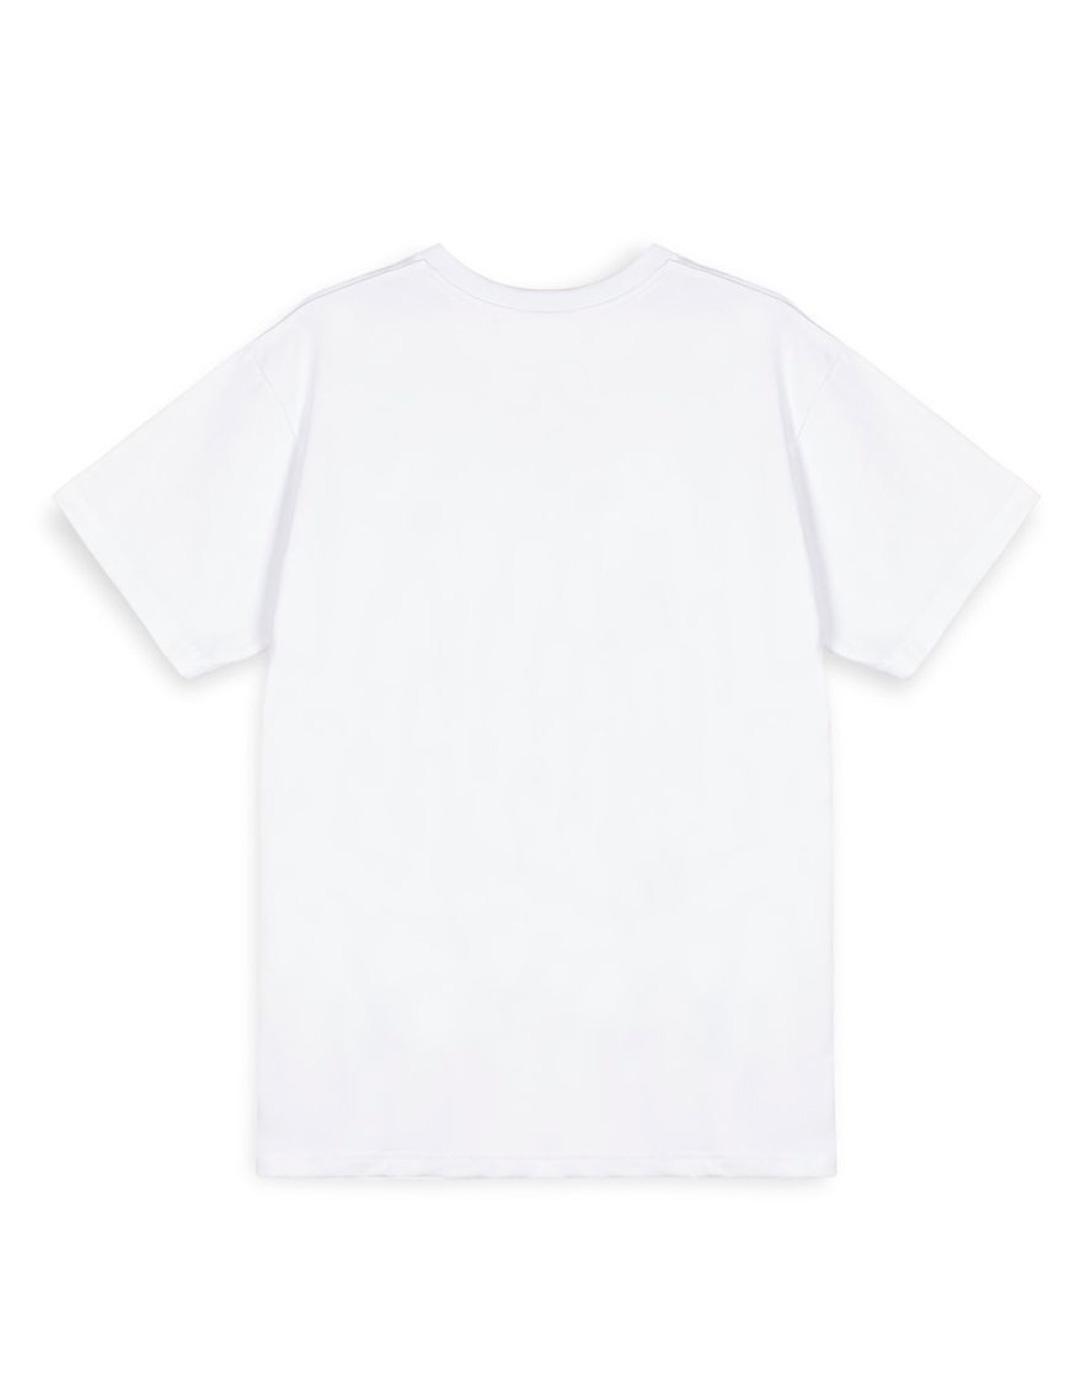 Camiseta Grimey 'The Sea Legend Nautica' Blanco